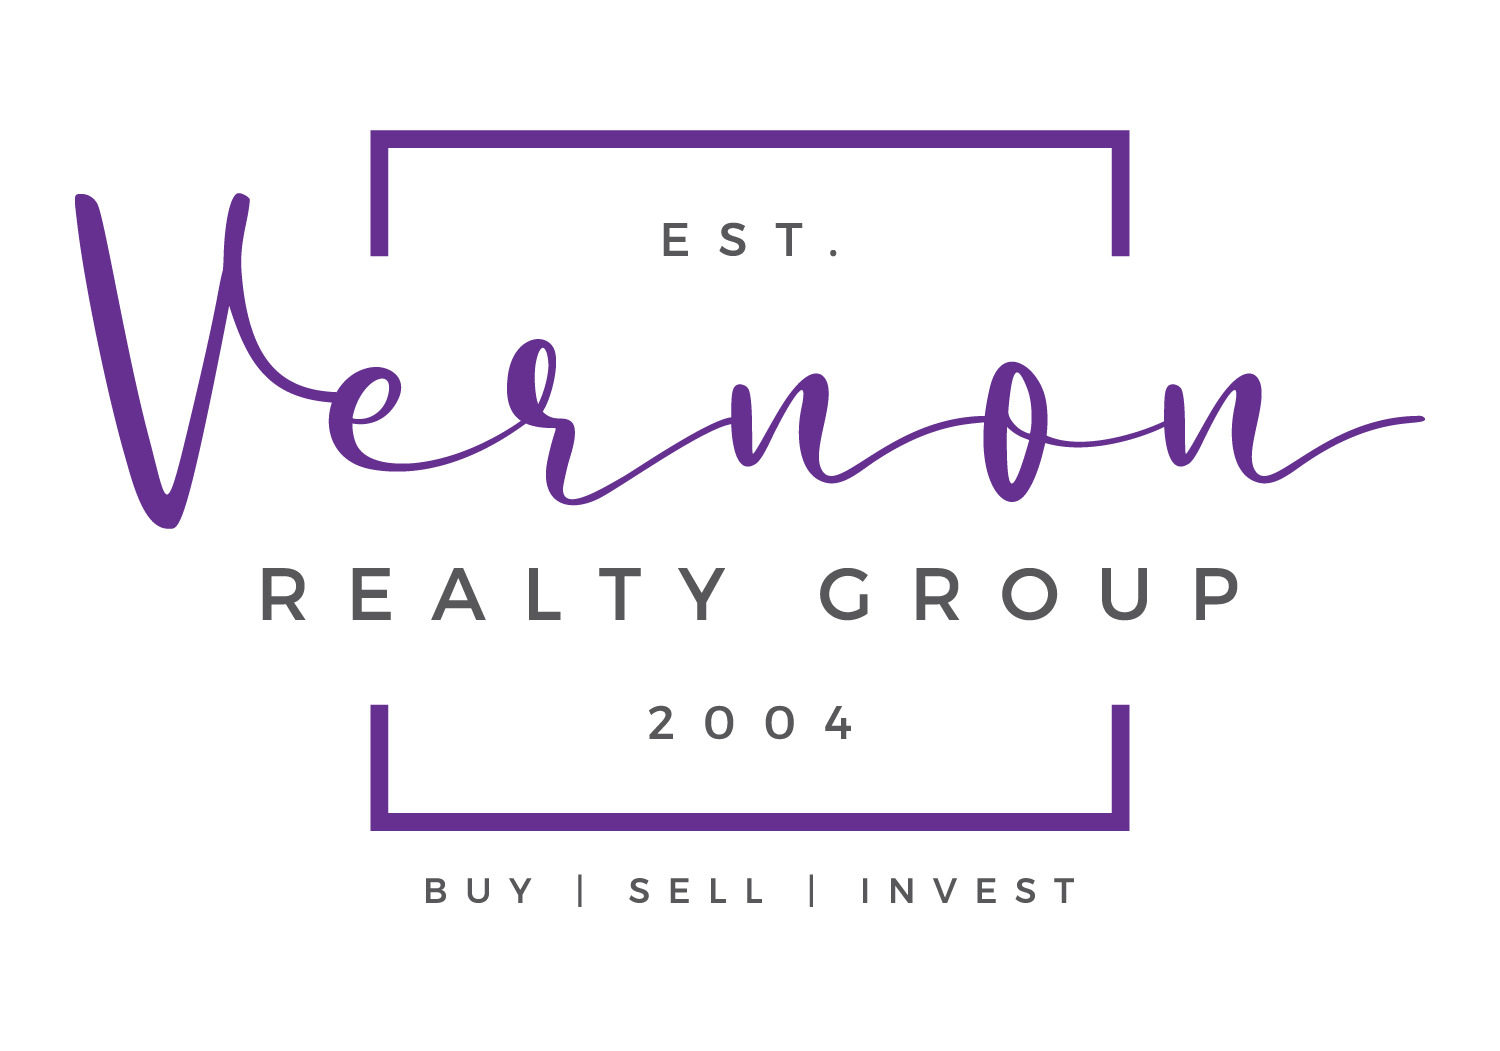 Vernon Realty Group w/ Keller Williams